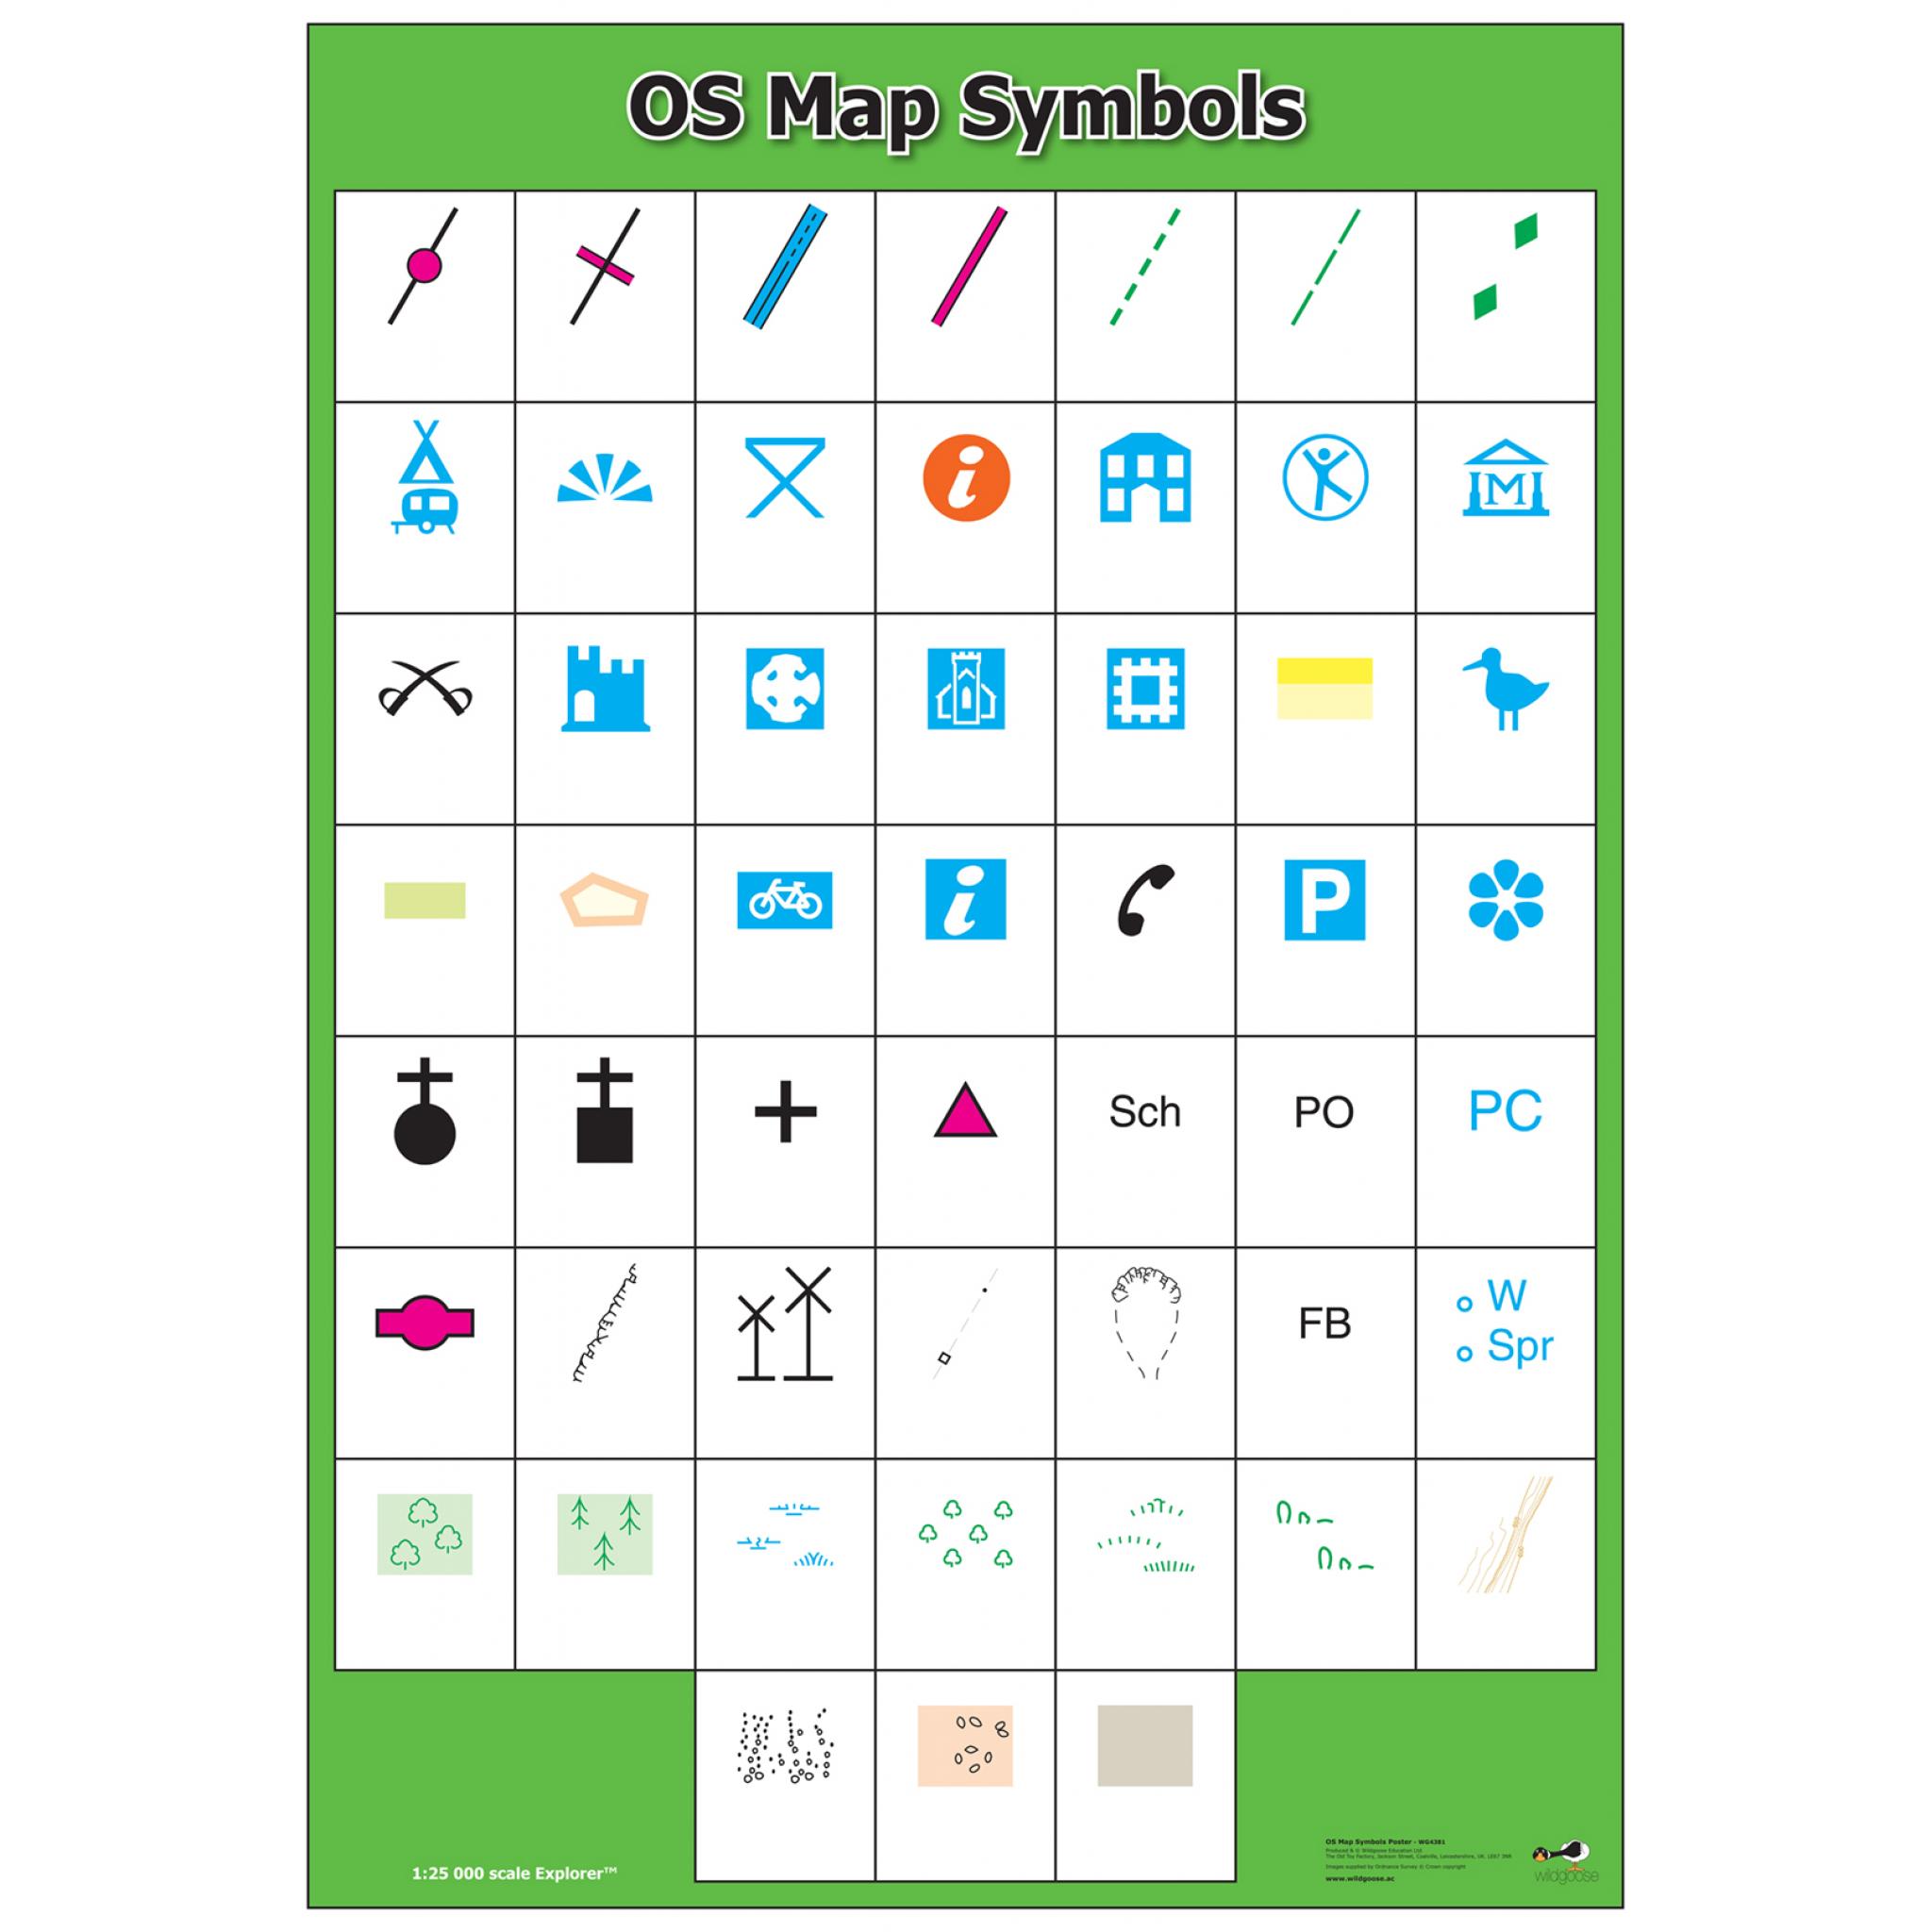 Ordnance Survey Map Symbols Meanings - BEST GAMES WALKTHROUGH